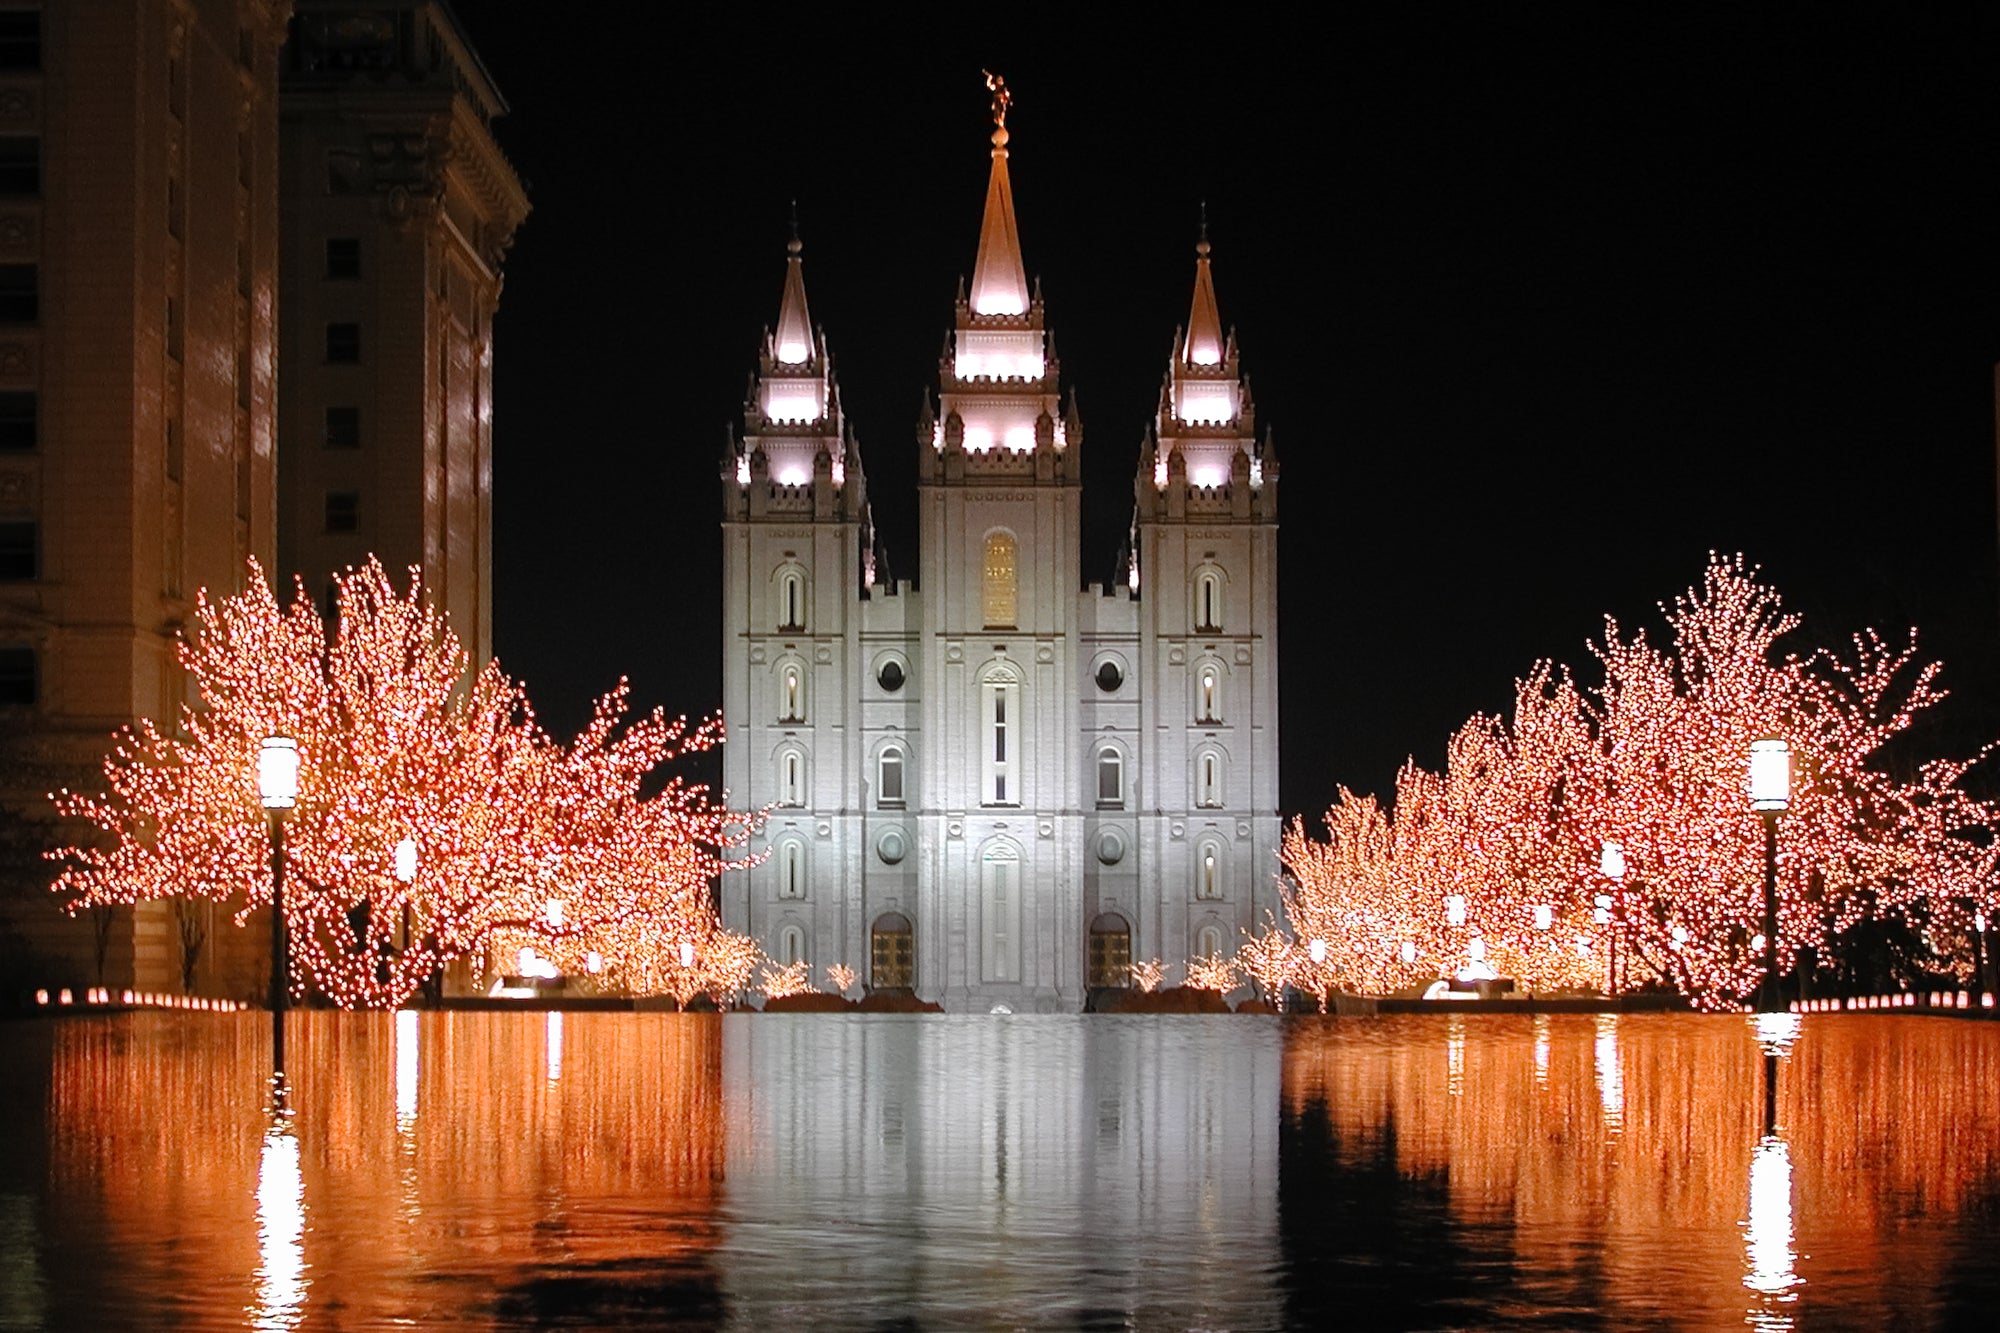 Salt Lake Temple - Christmas Reflections by Robert A Boyd